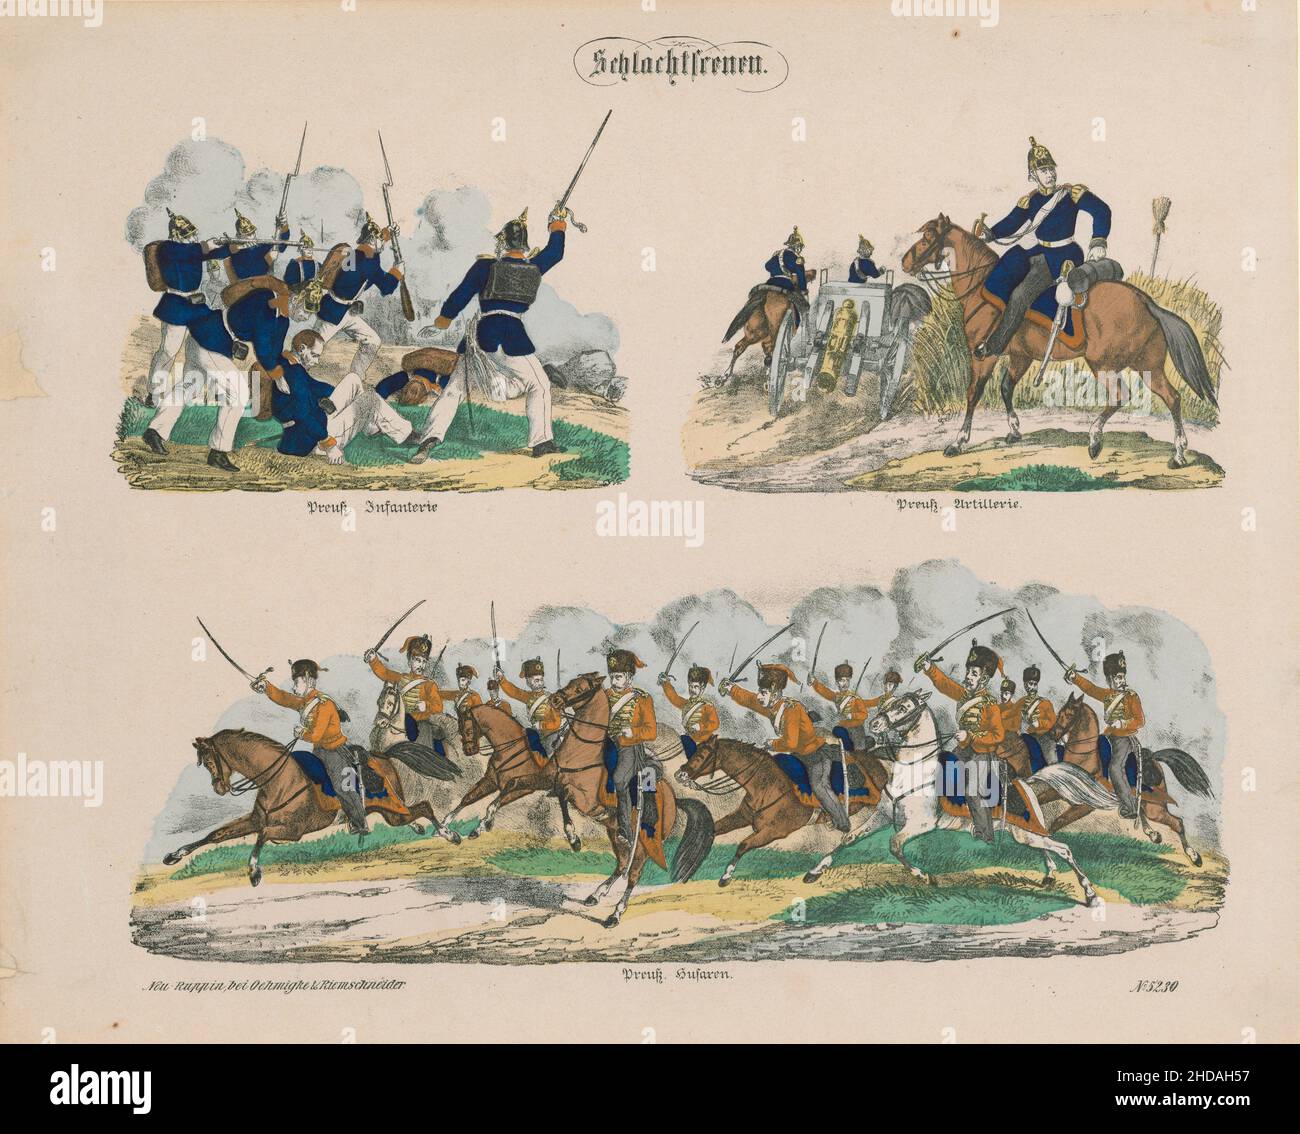 Vintage Lithographie: Preußische Armee in Kampfszenen. 1866 Preußische Infanterie, preußische Artillerie, preußische Husaren Stockfoto